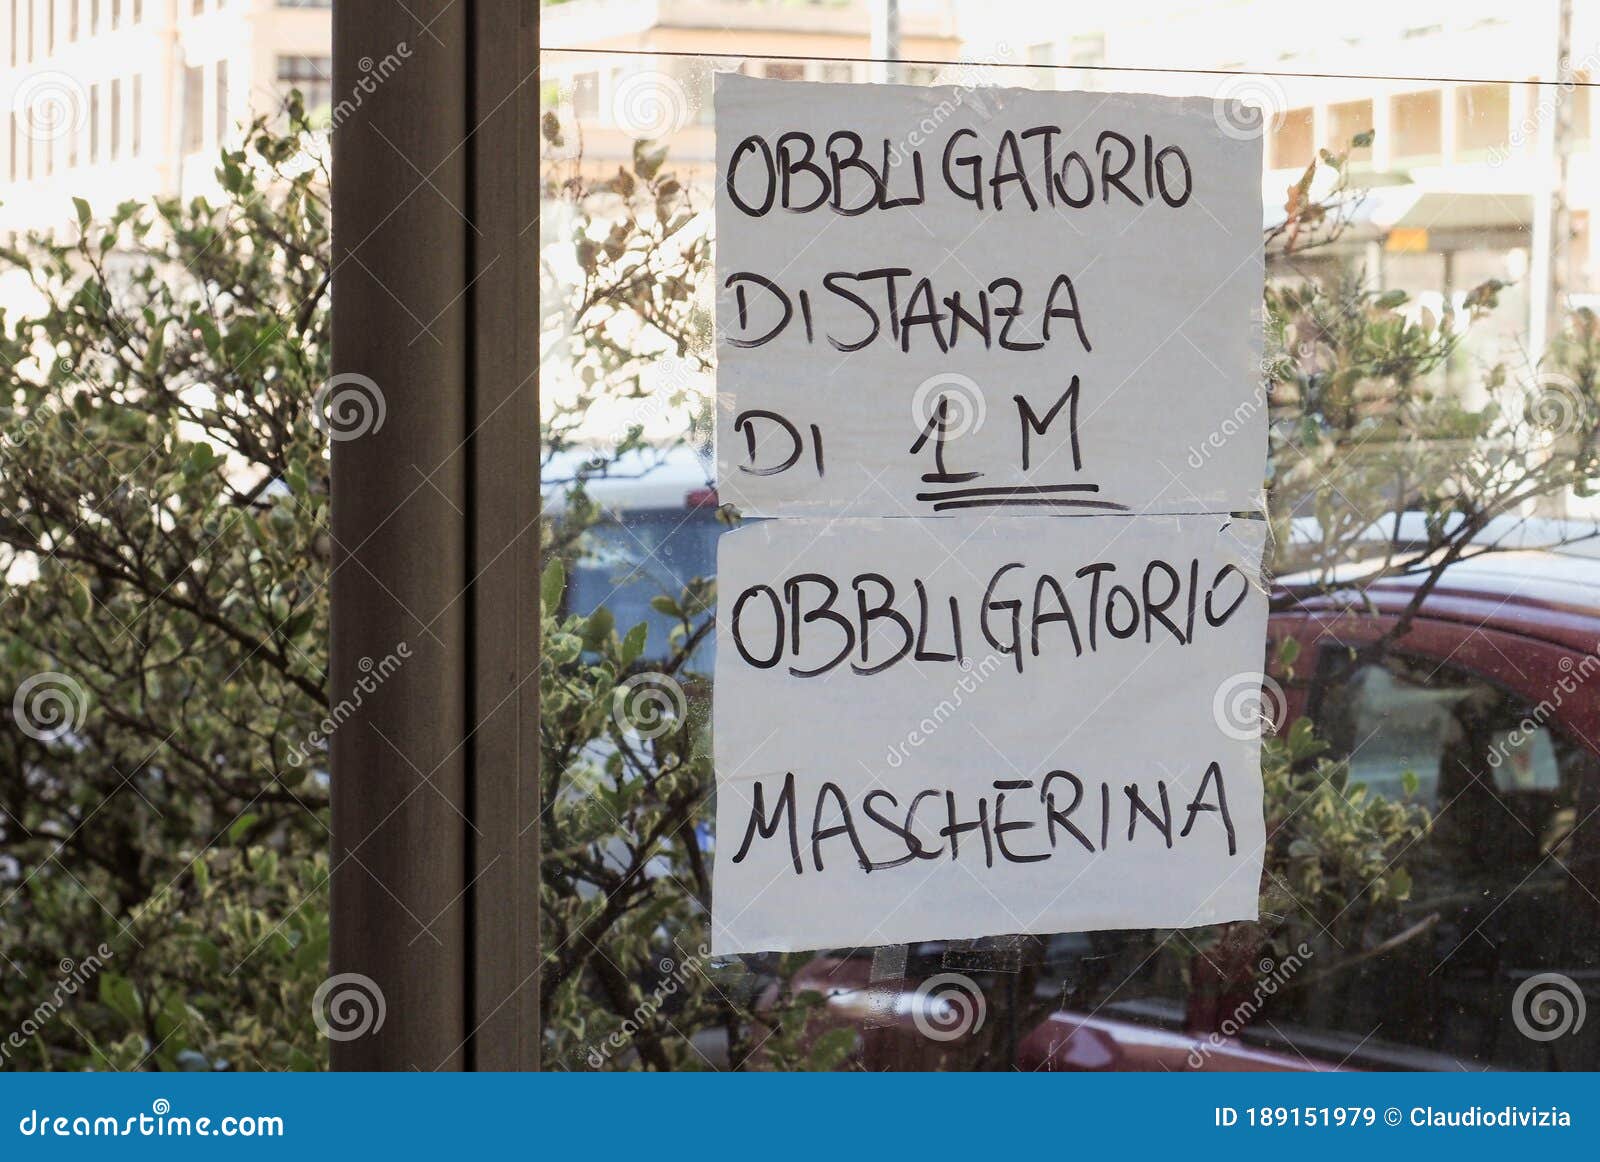 italian covid social distance sign